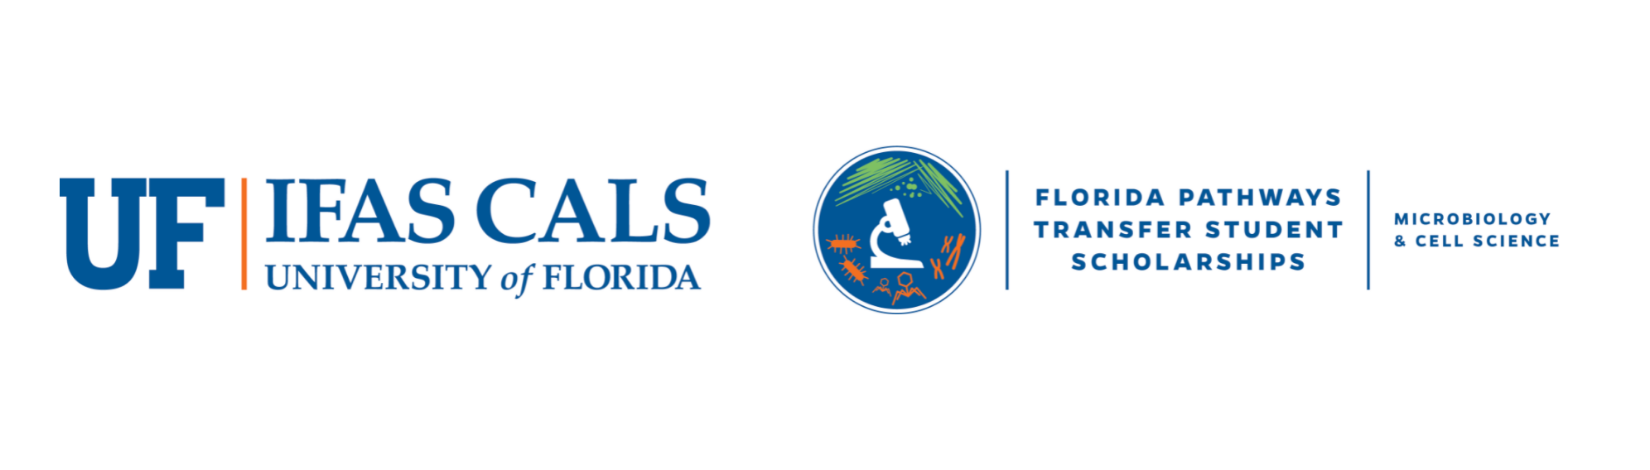 Florida Pathways S-STEM Scholarship Banner Image